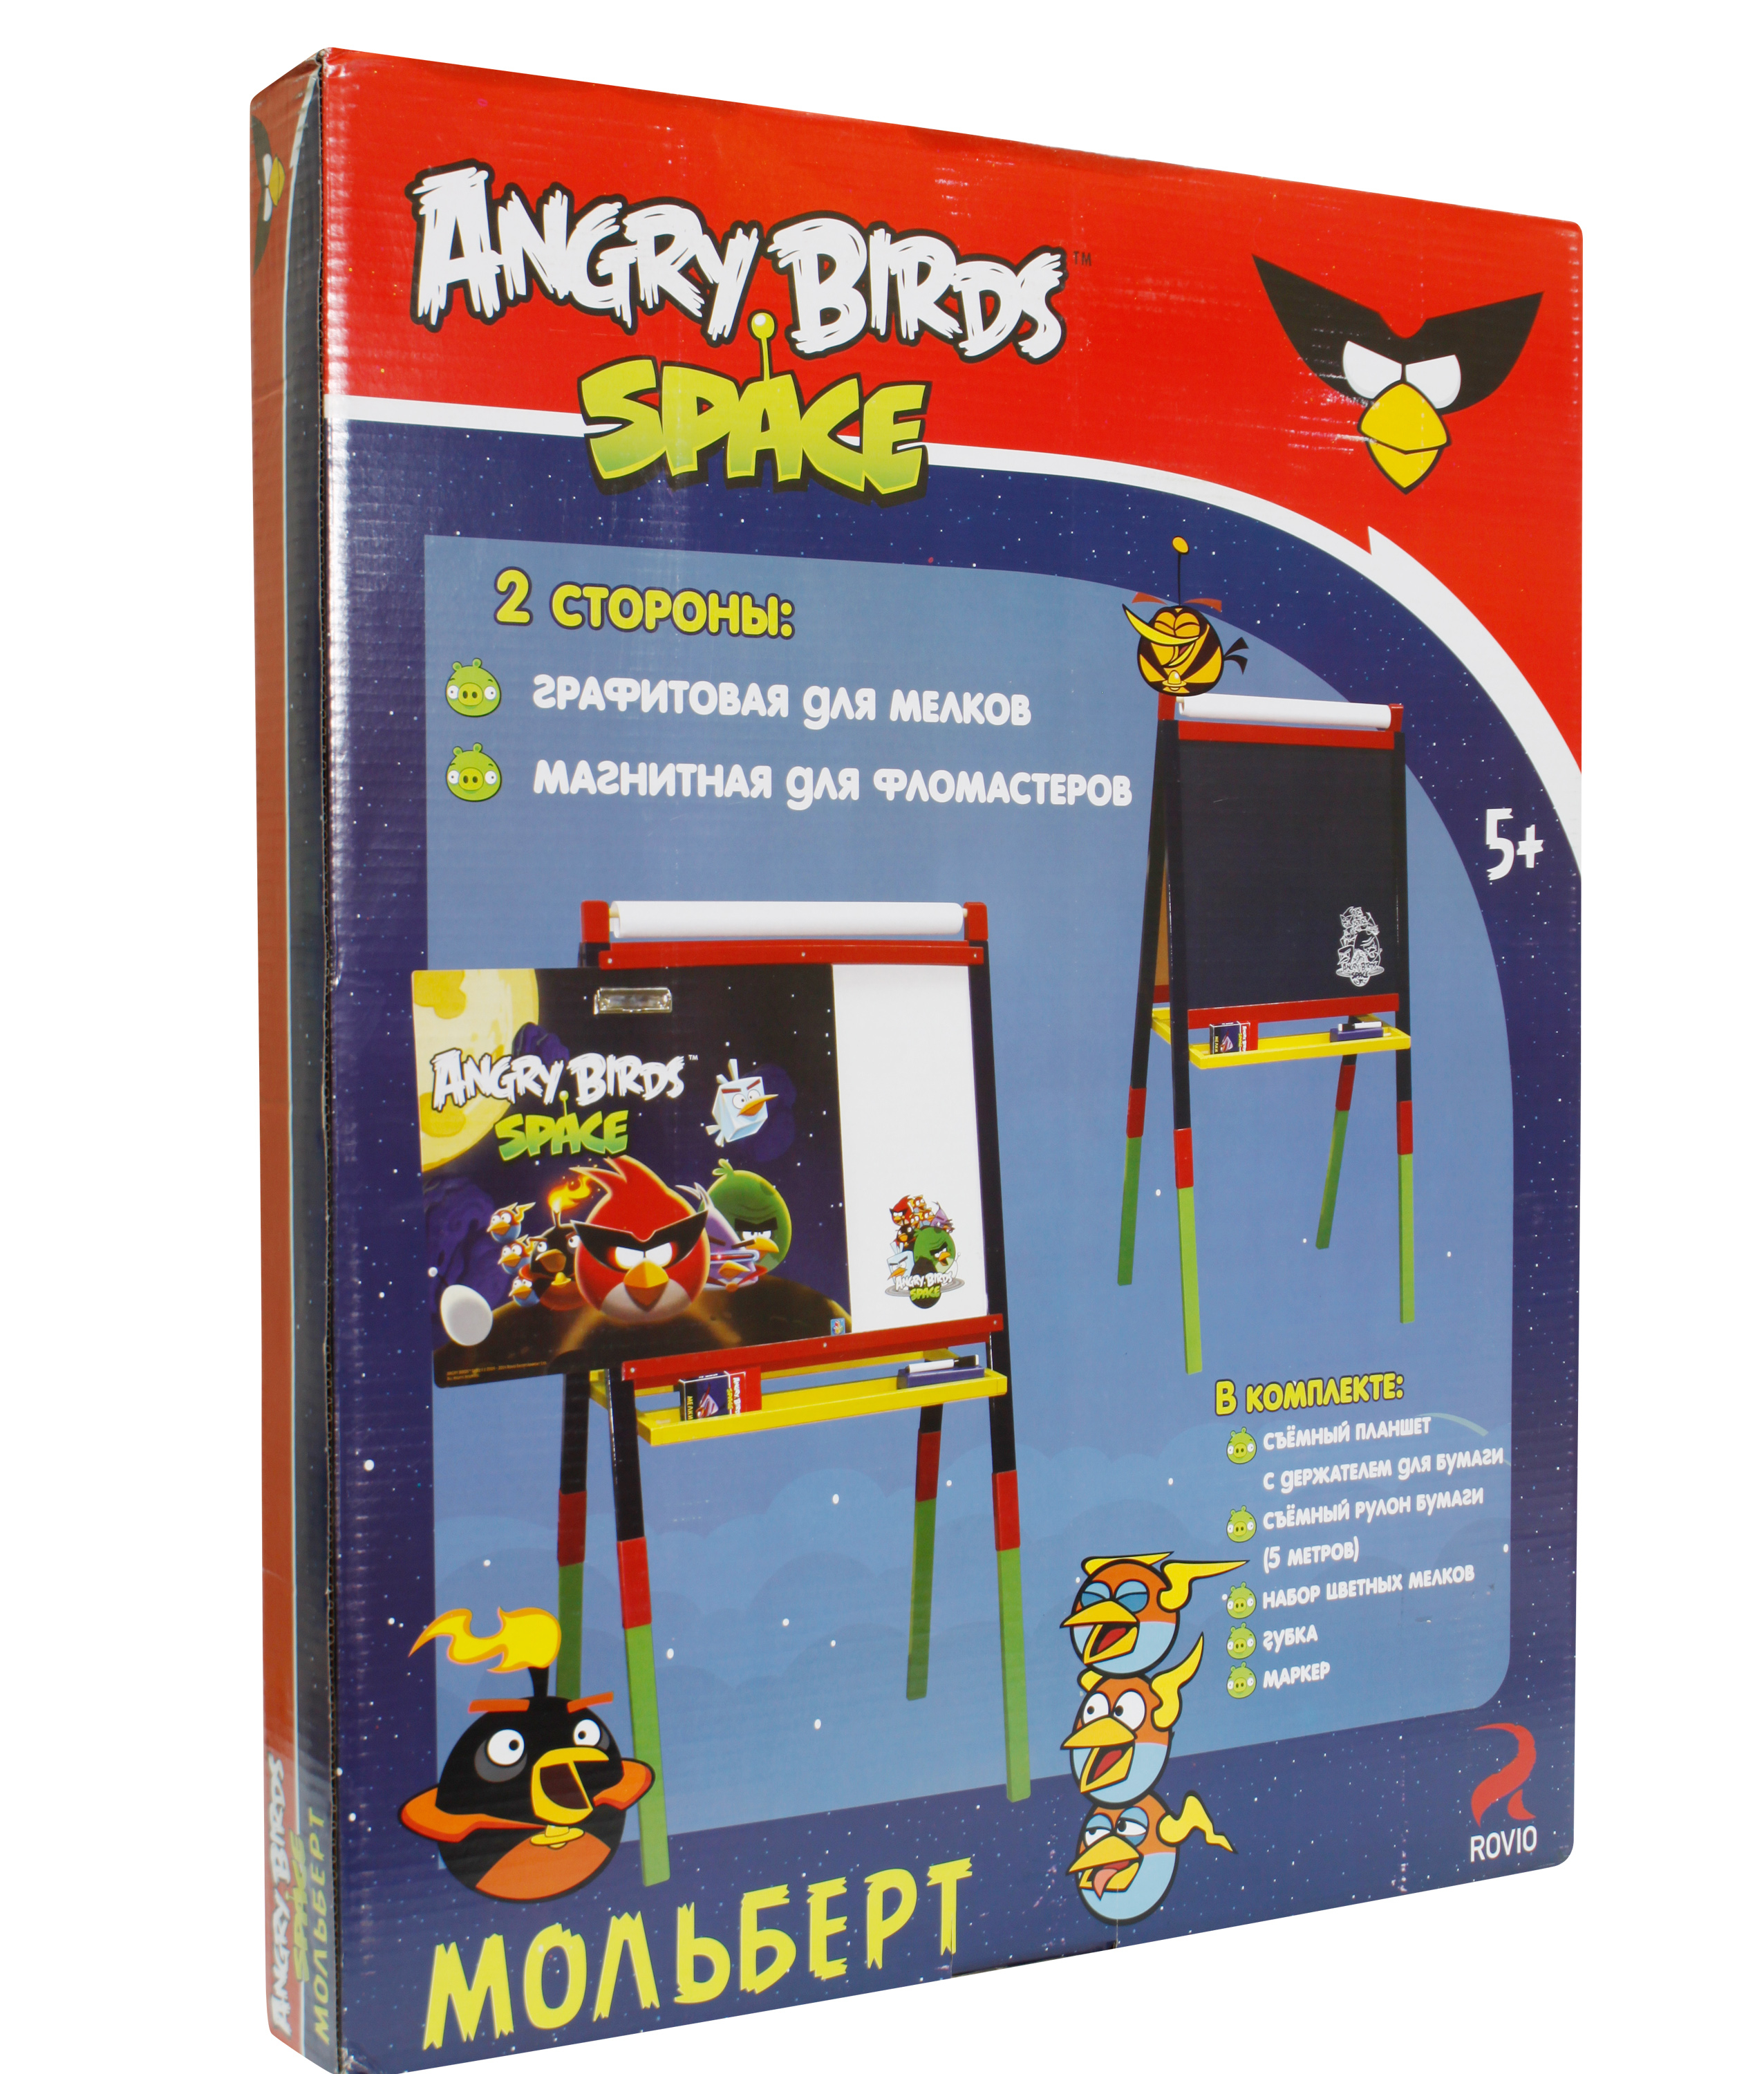 Деревянный мольберт 1 Toy "Angry birds Space". Фото N2